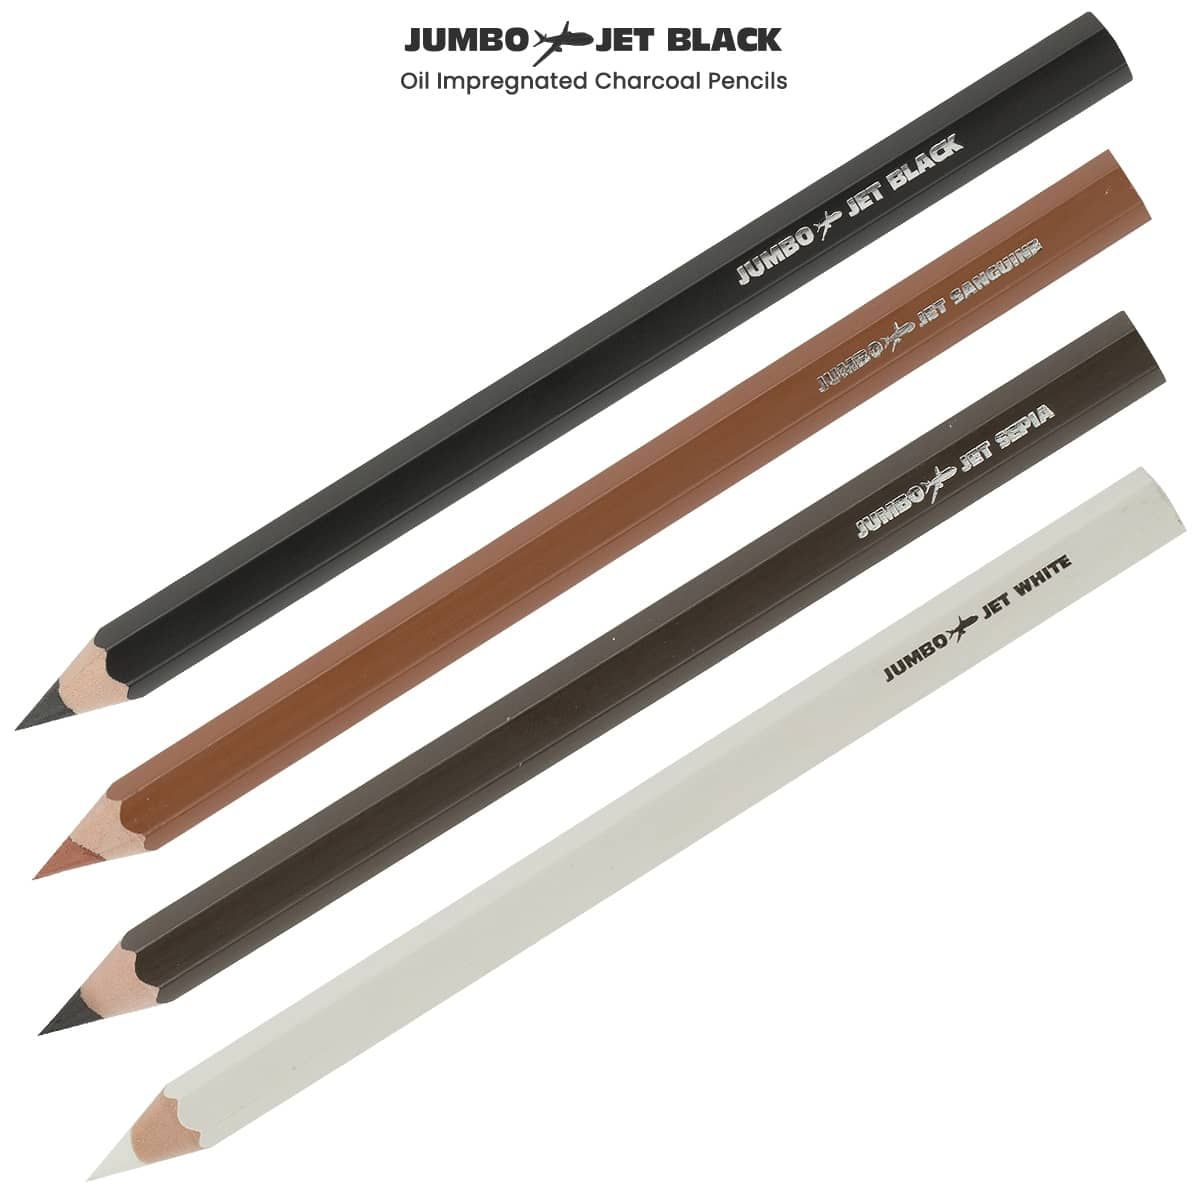 Jumbo Jet Oil Impregnated Charcoal Pencils